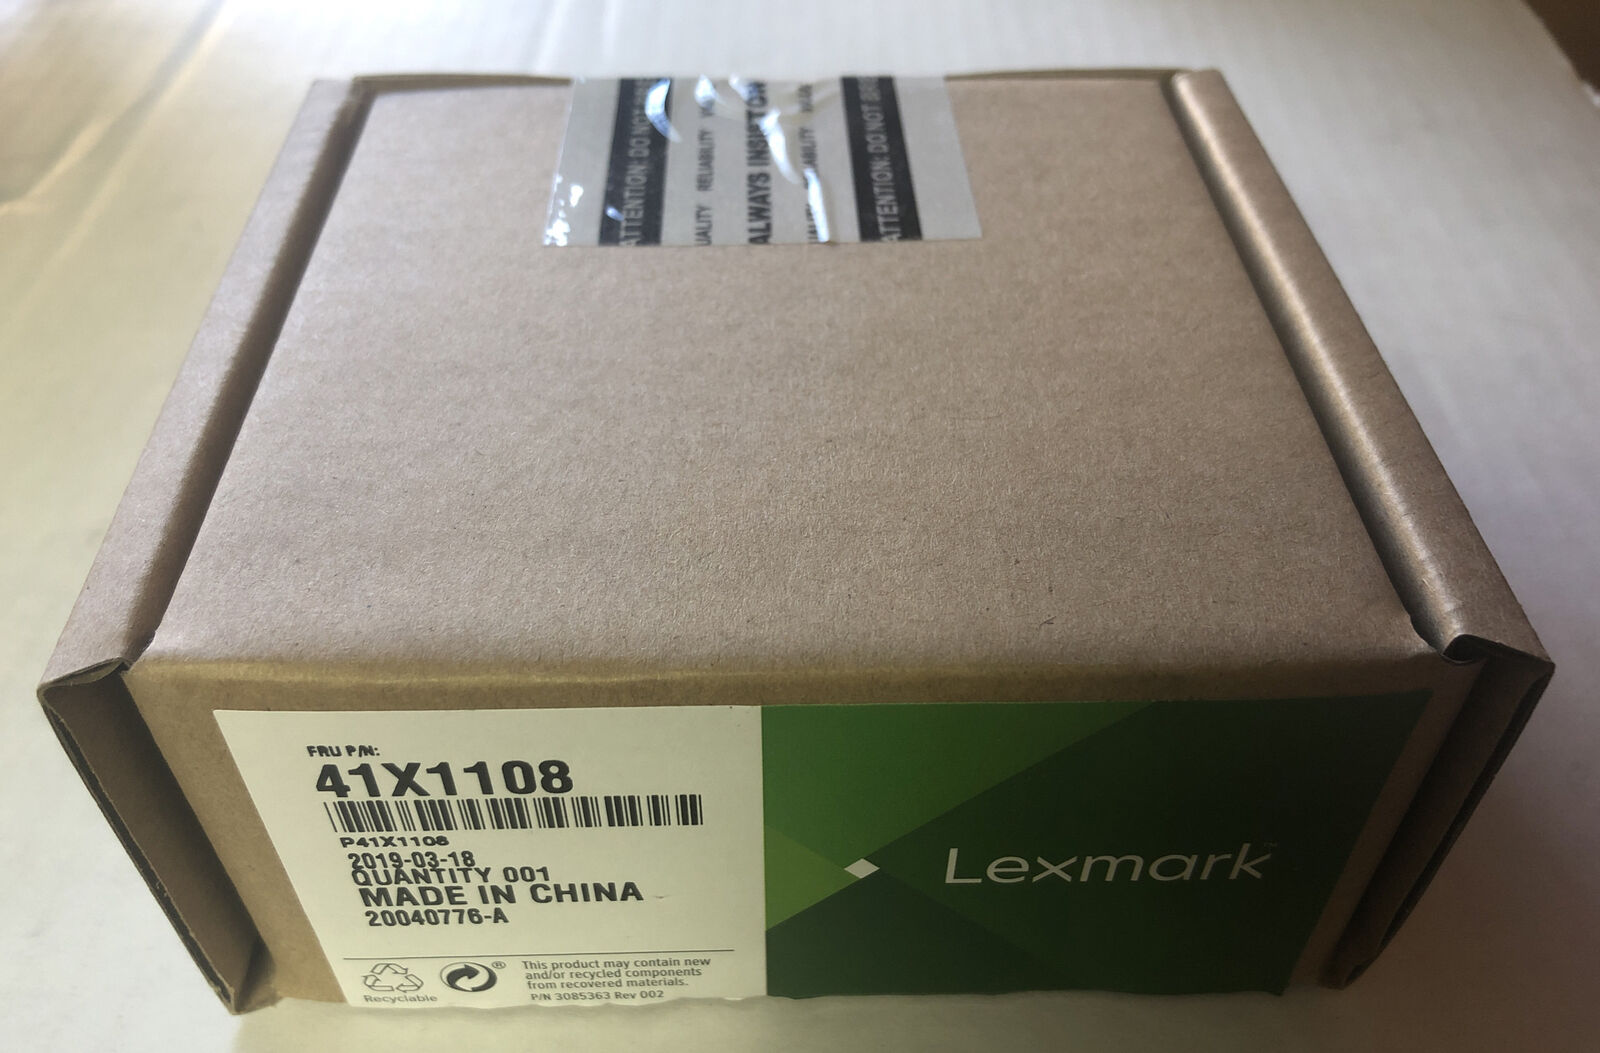 Lexmark Media Pick Up Roller - Input Tray - Part # 41x1108